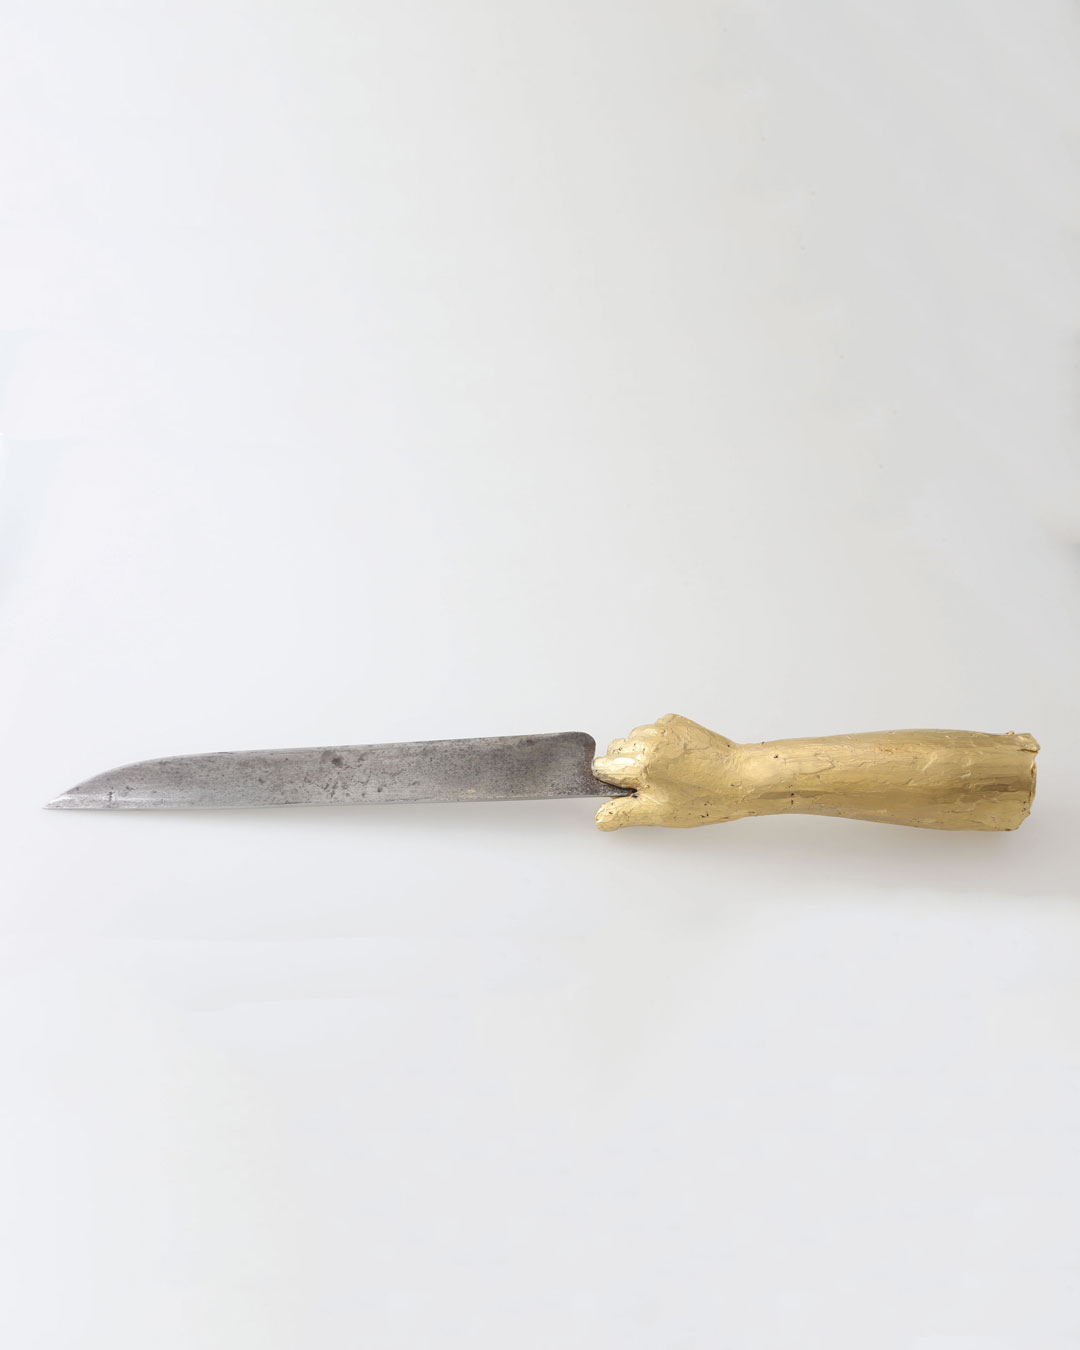 Juliane Brandes, untitled, 2017, knife; gold-plated brass, steel (1860) blade, 320 x 30 mm, €2430